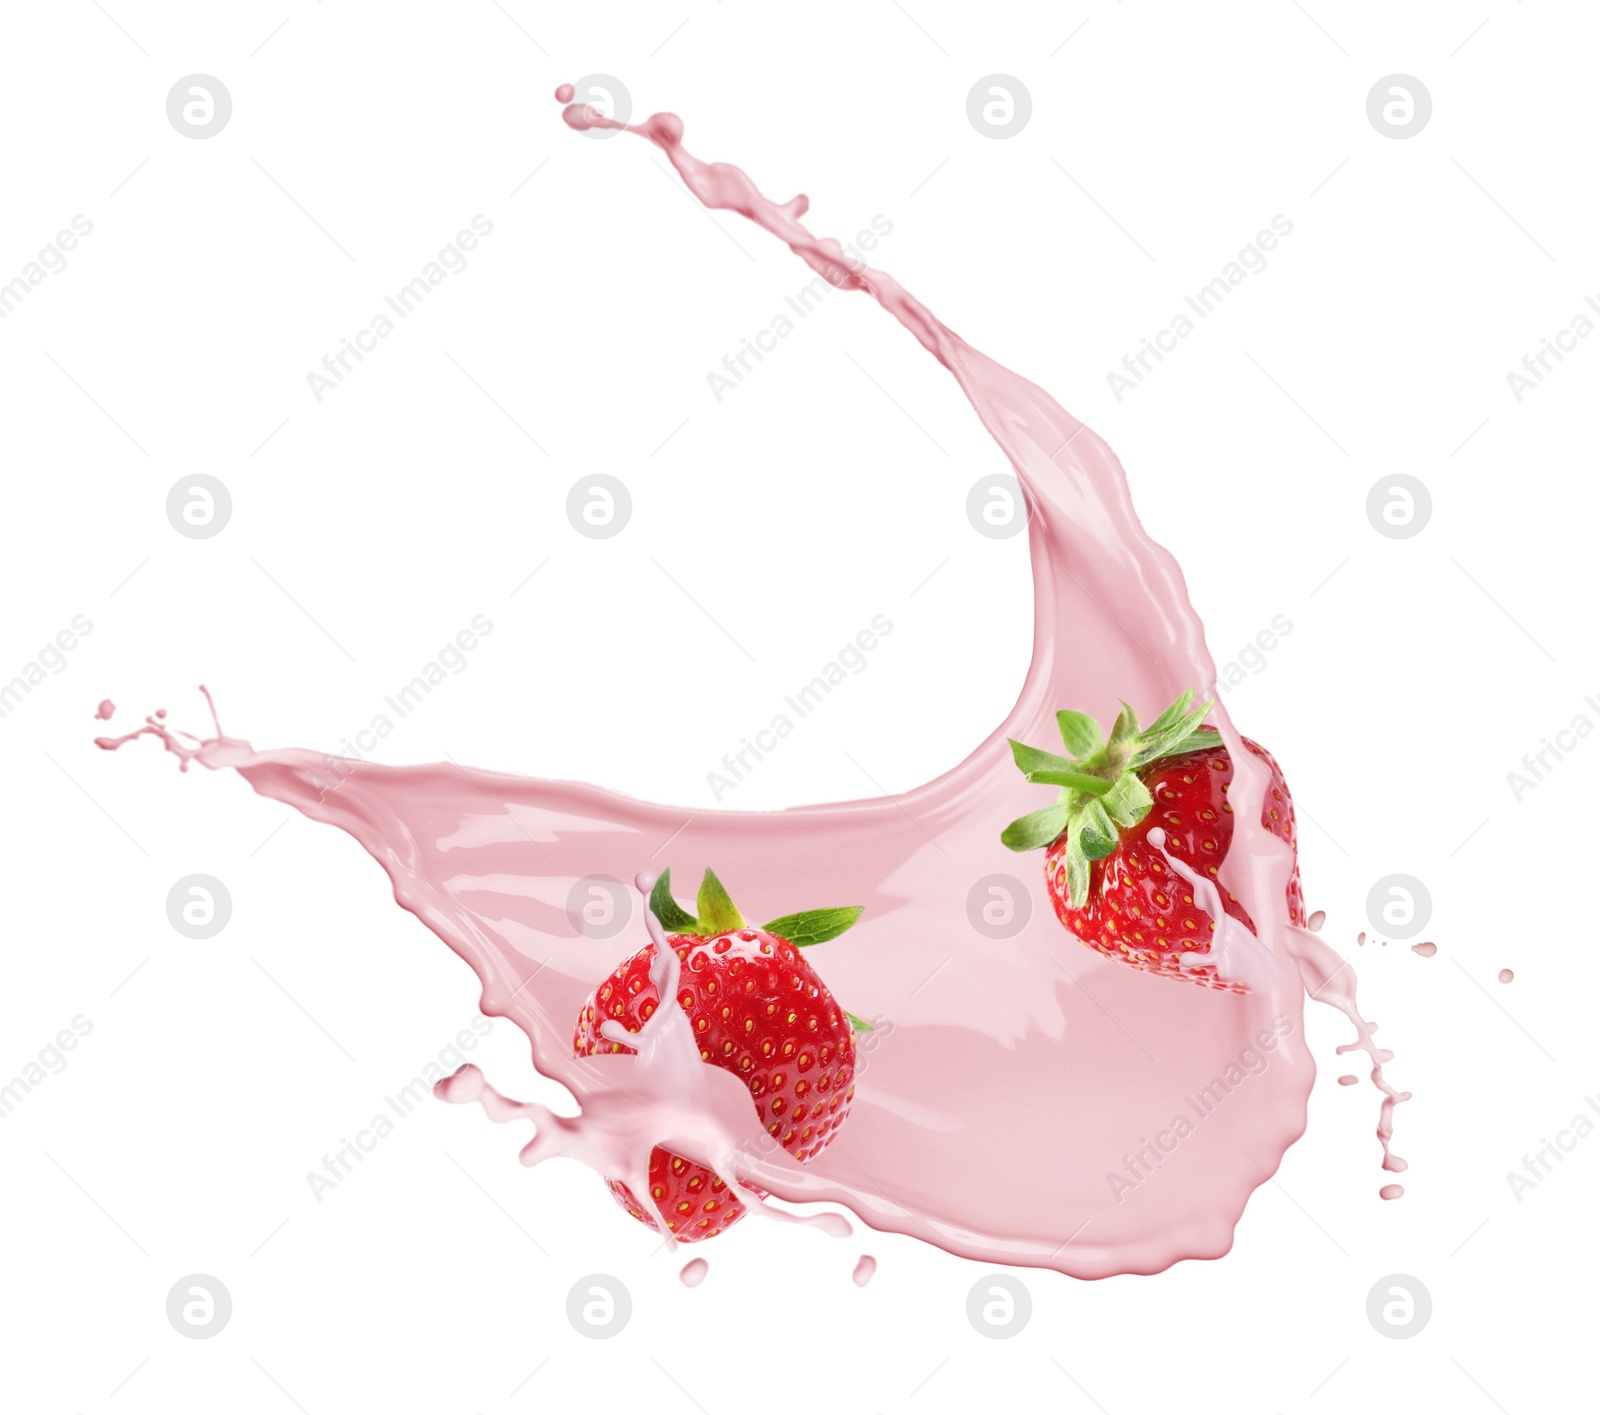 Image of Fresh strawberries with milkshake splash on white background